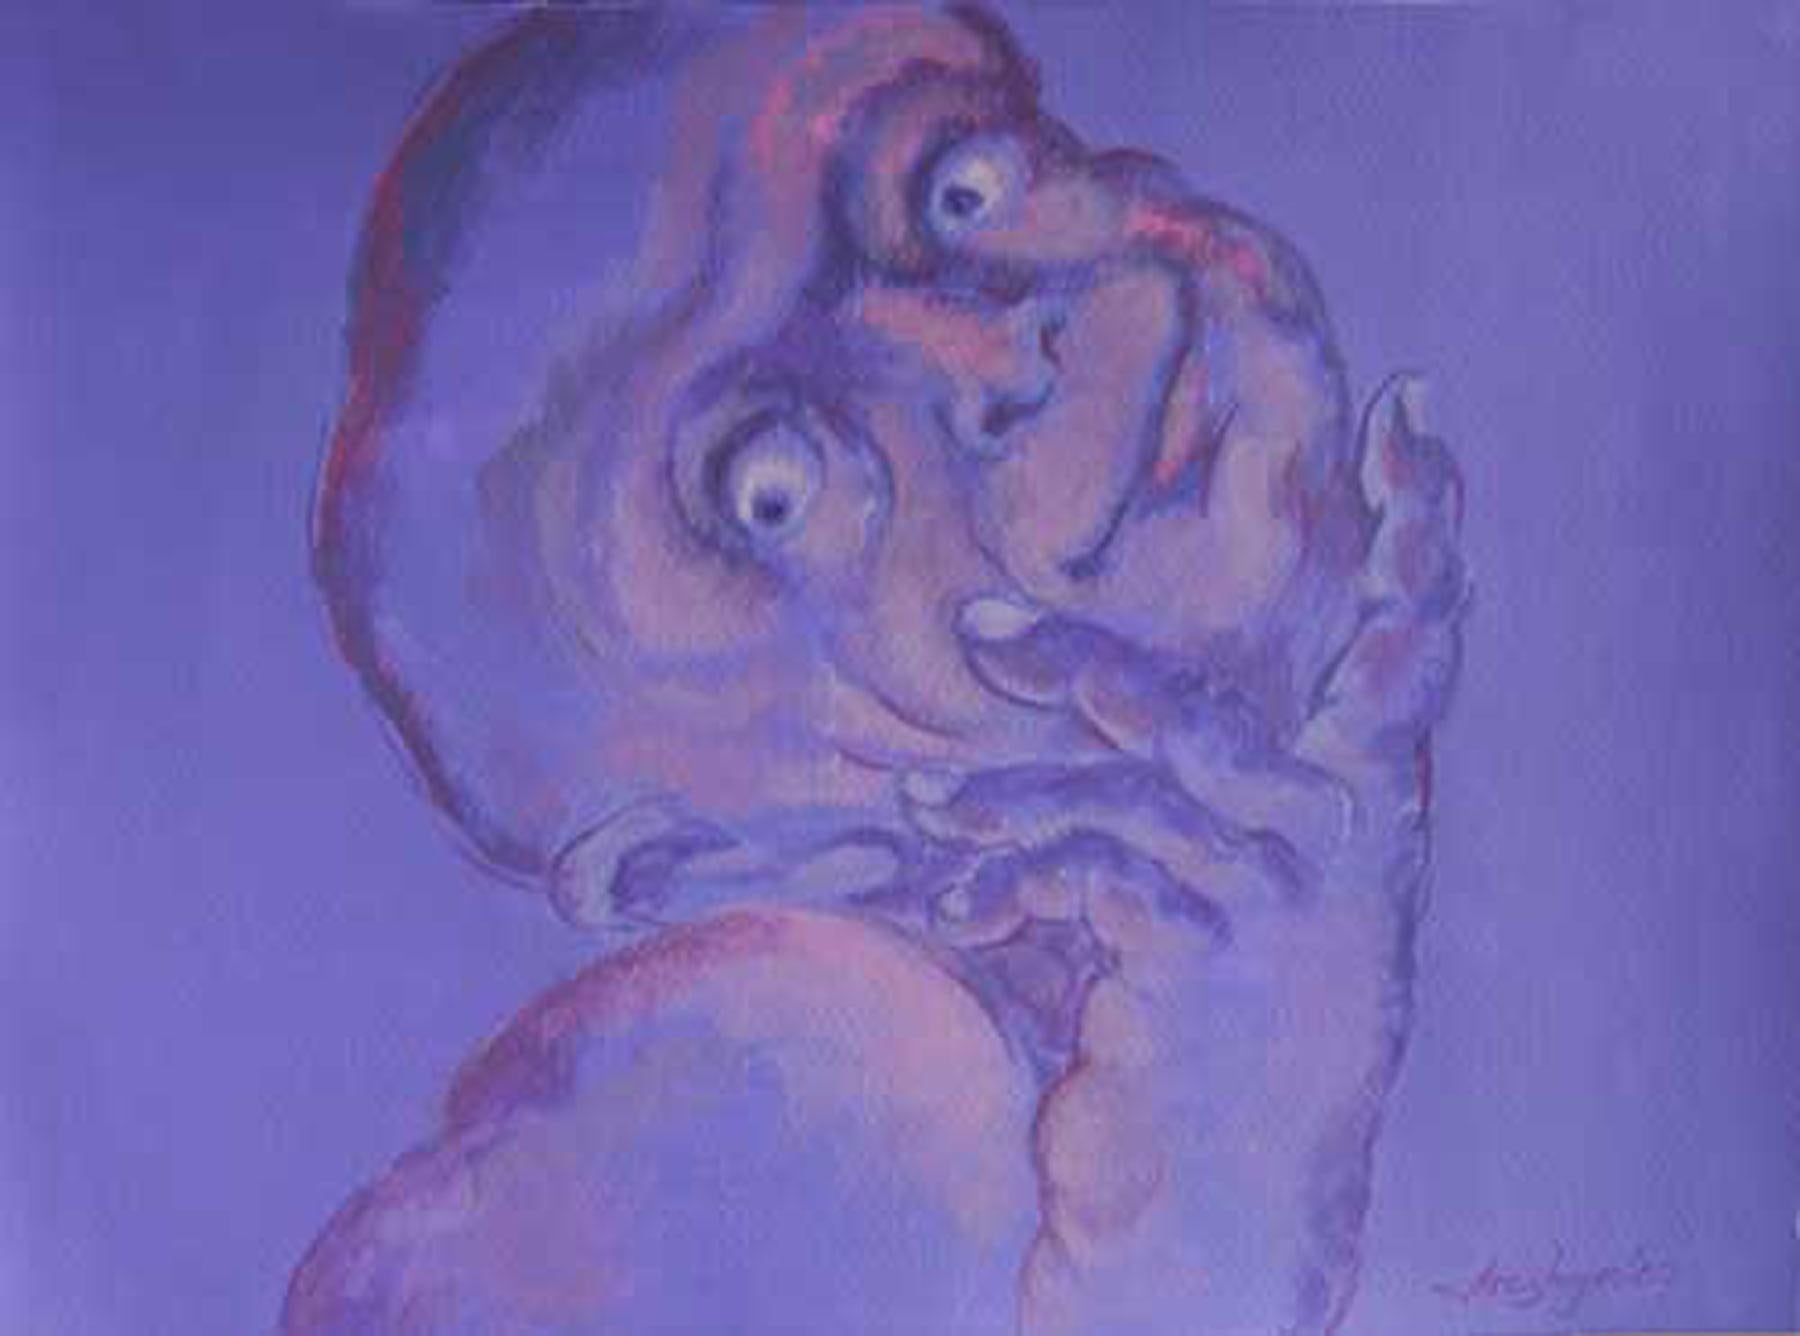 Arghya Priya Majumdar Figurative Painting - Human Form, Multi Faceted, Acrylic Painting, Blue, Violet, Red colors "In Stock"